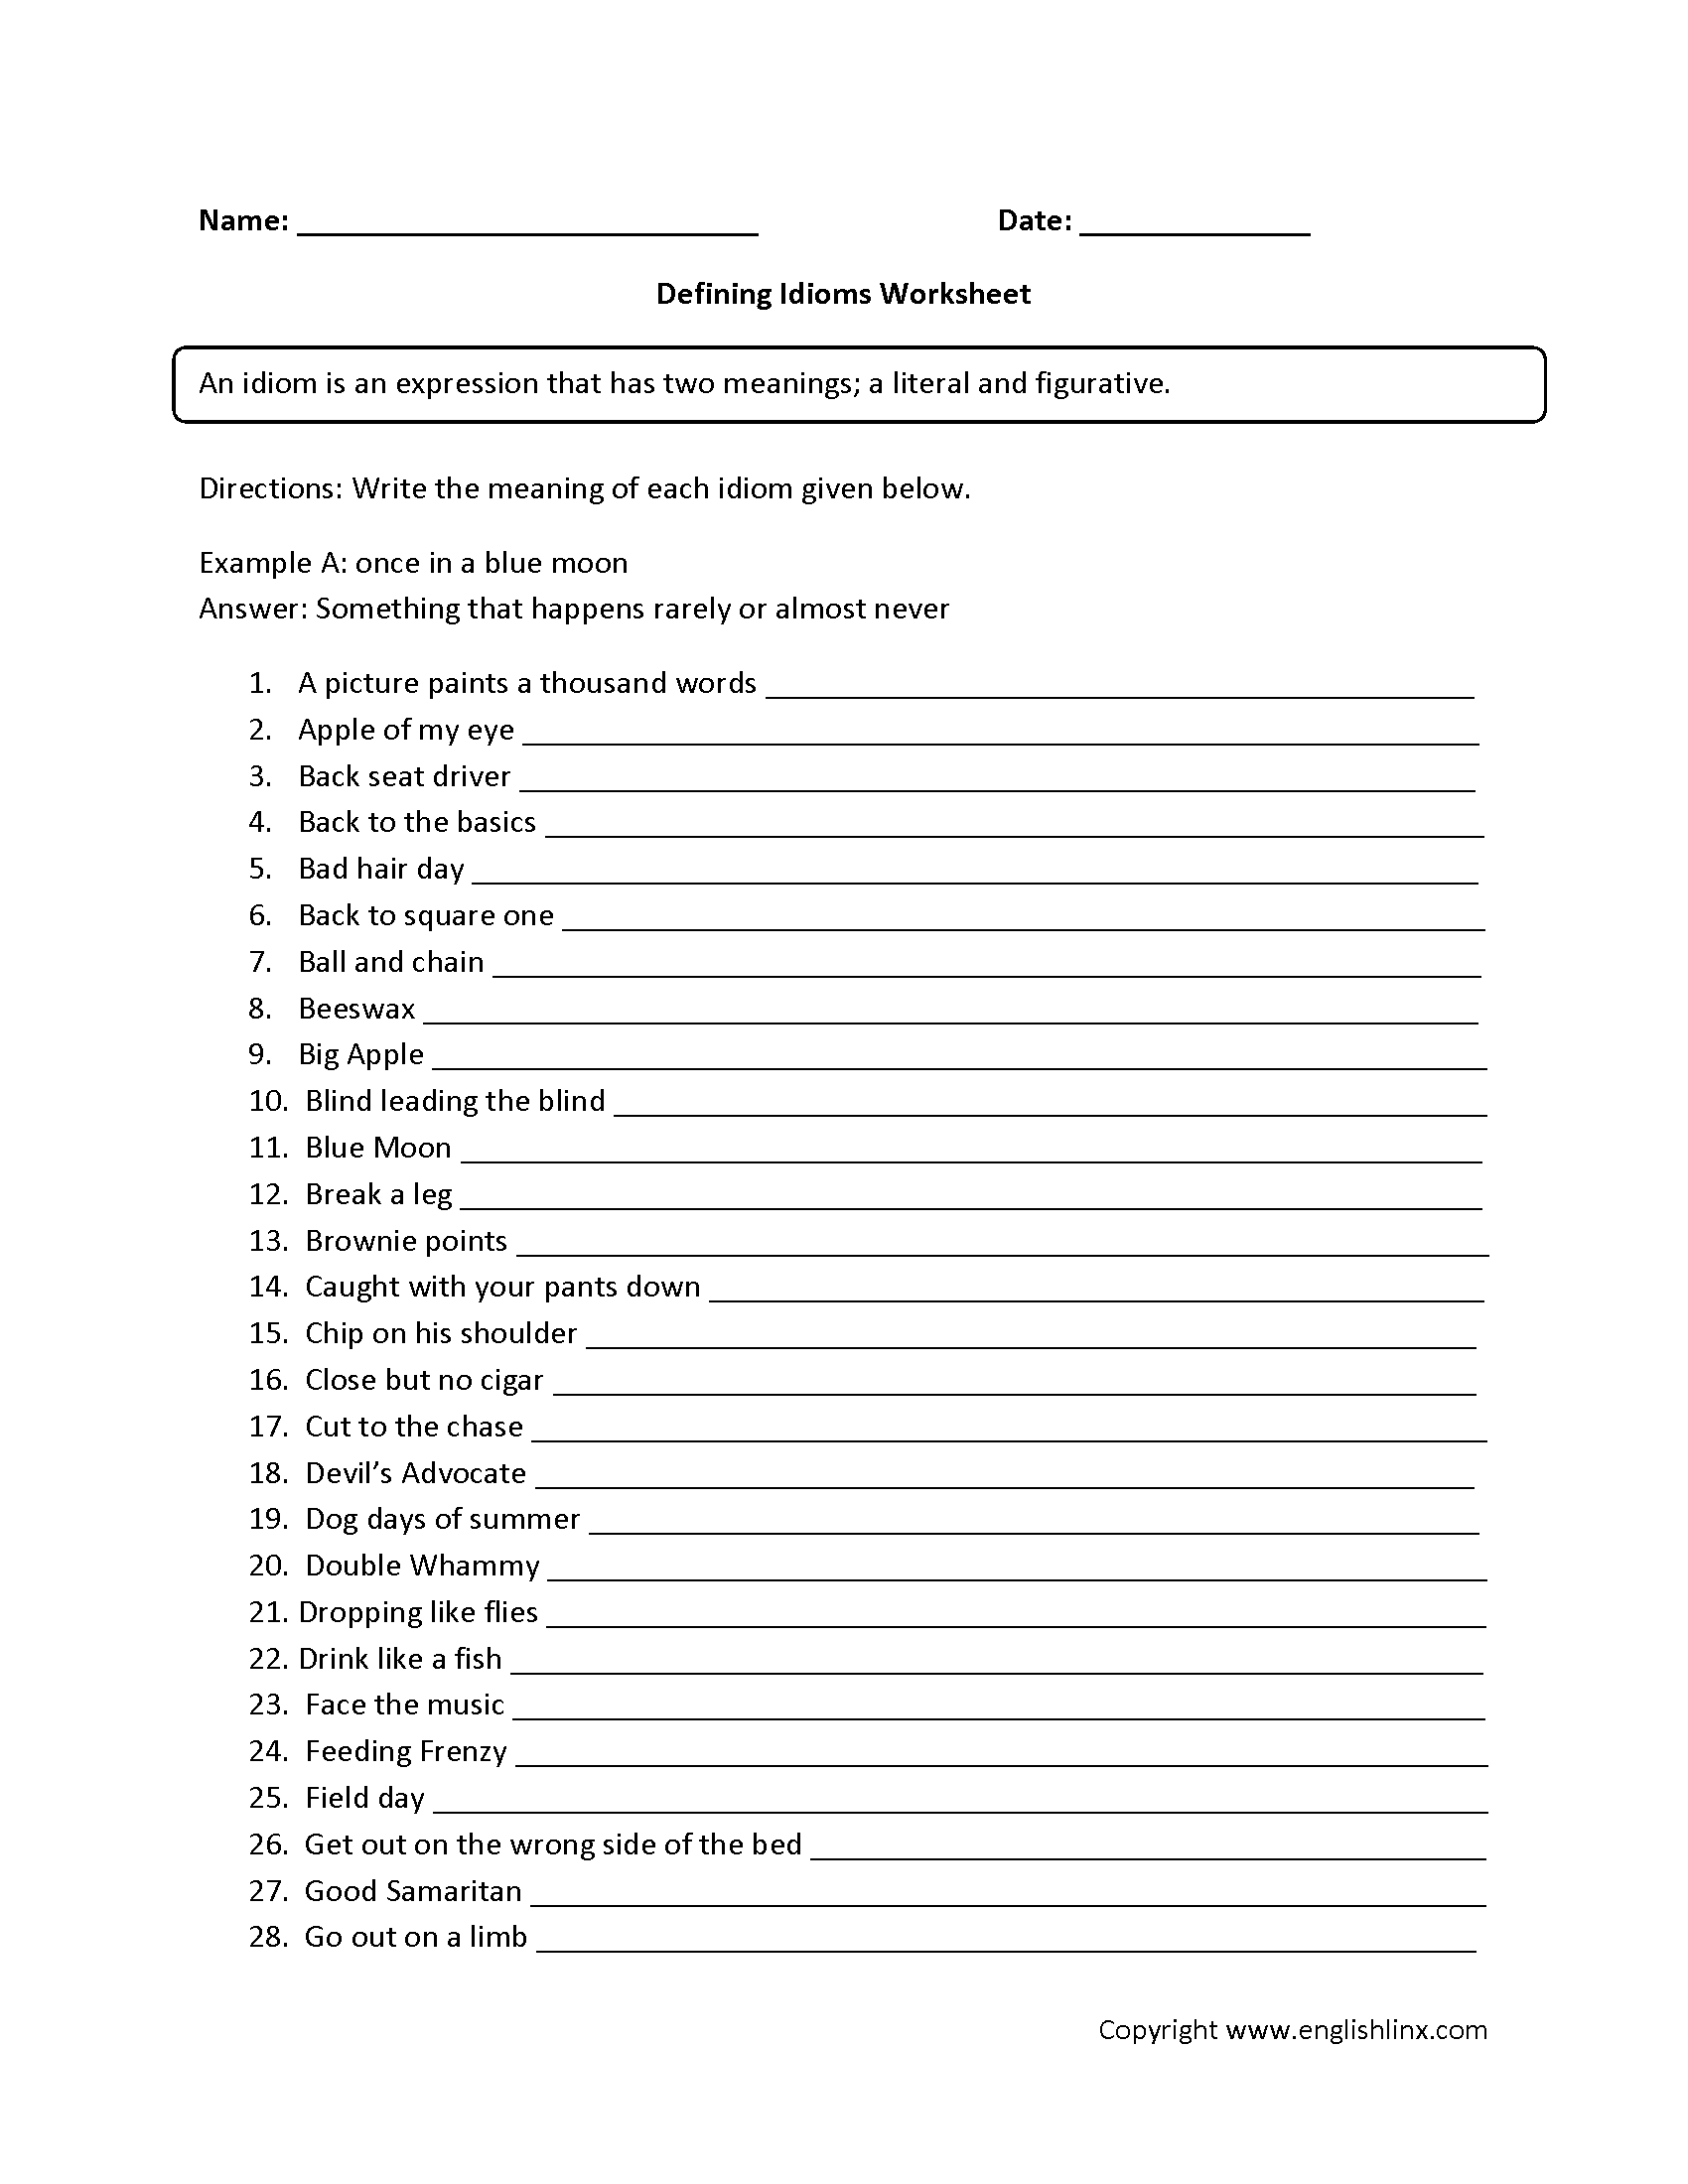 Defining Idioms Worksheet